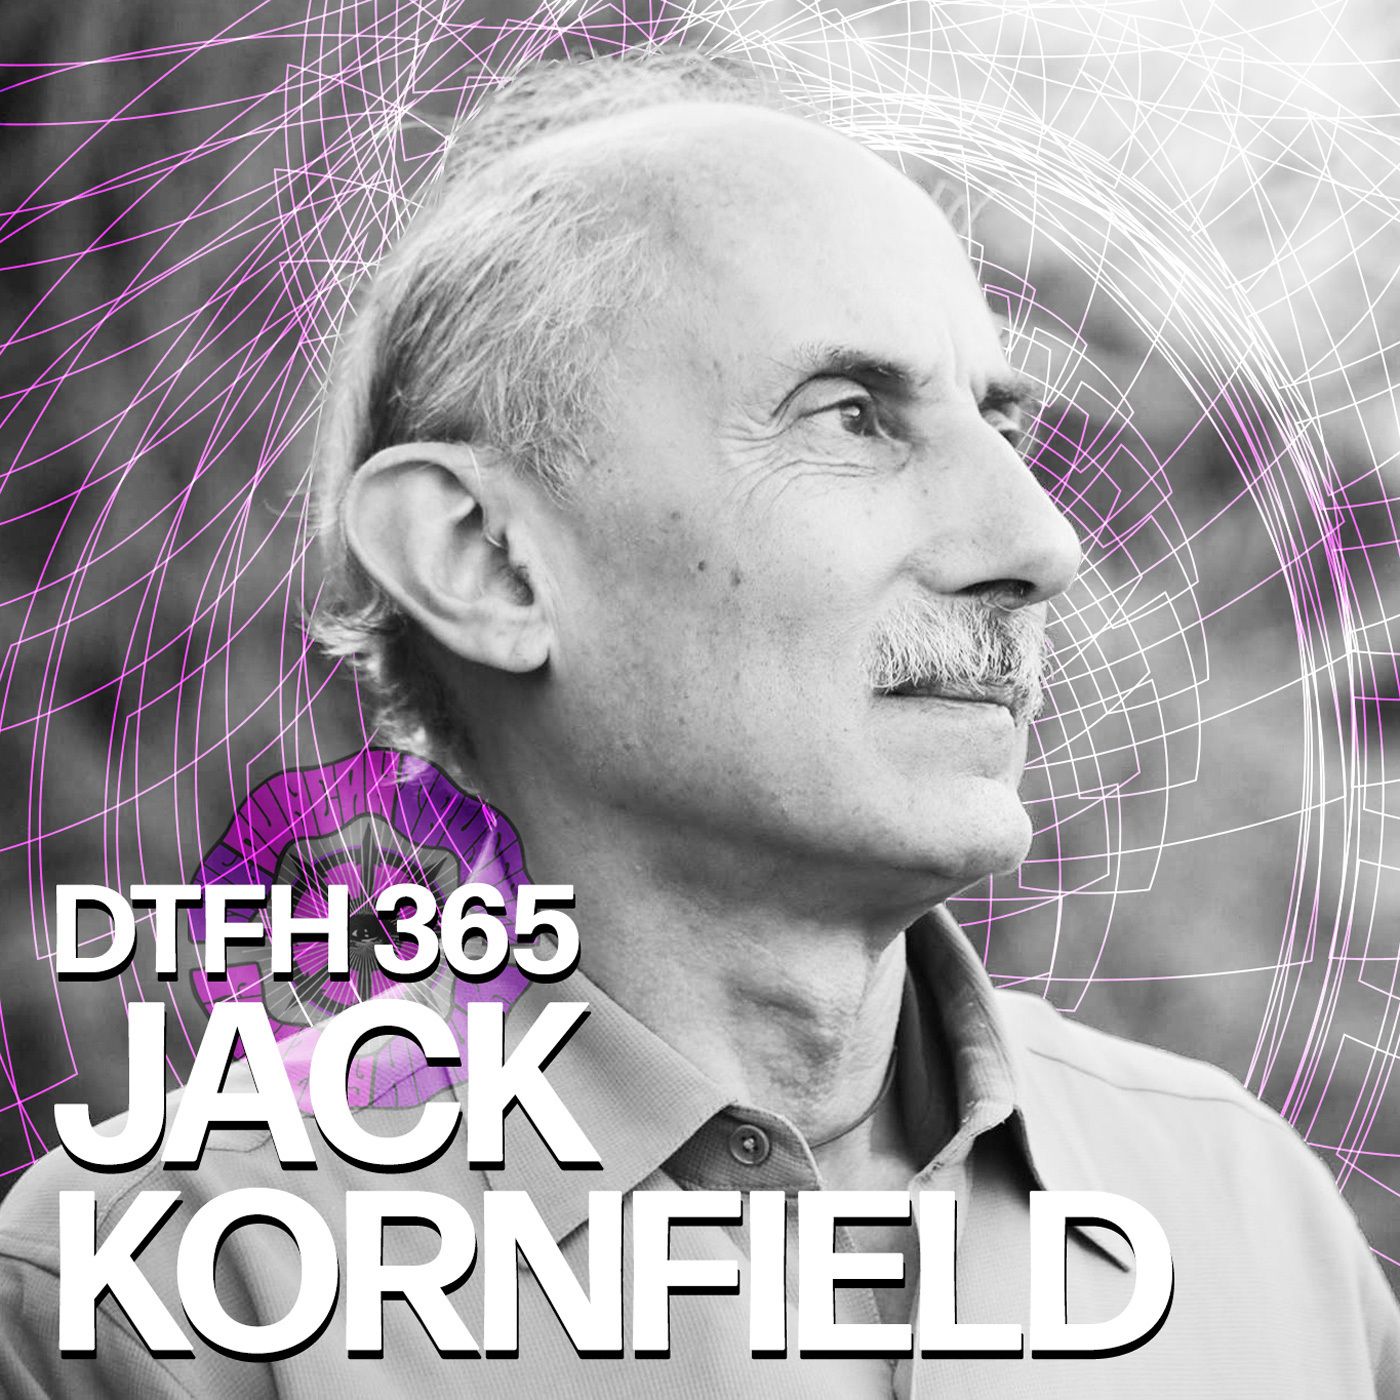 Jack Kornfield on Buddhism